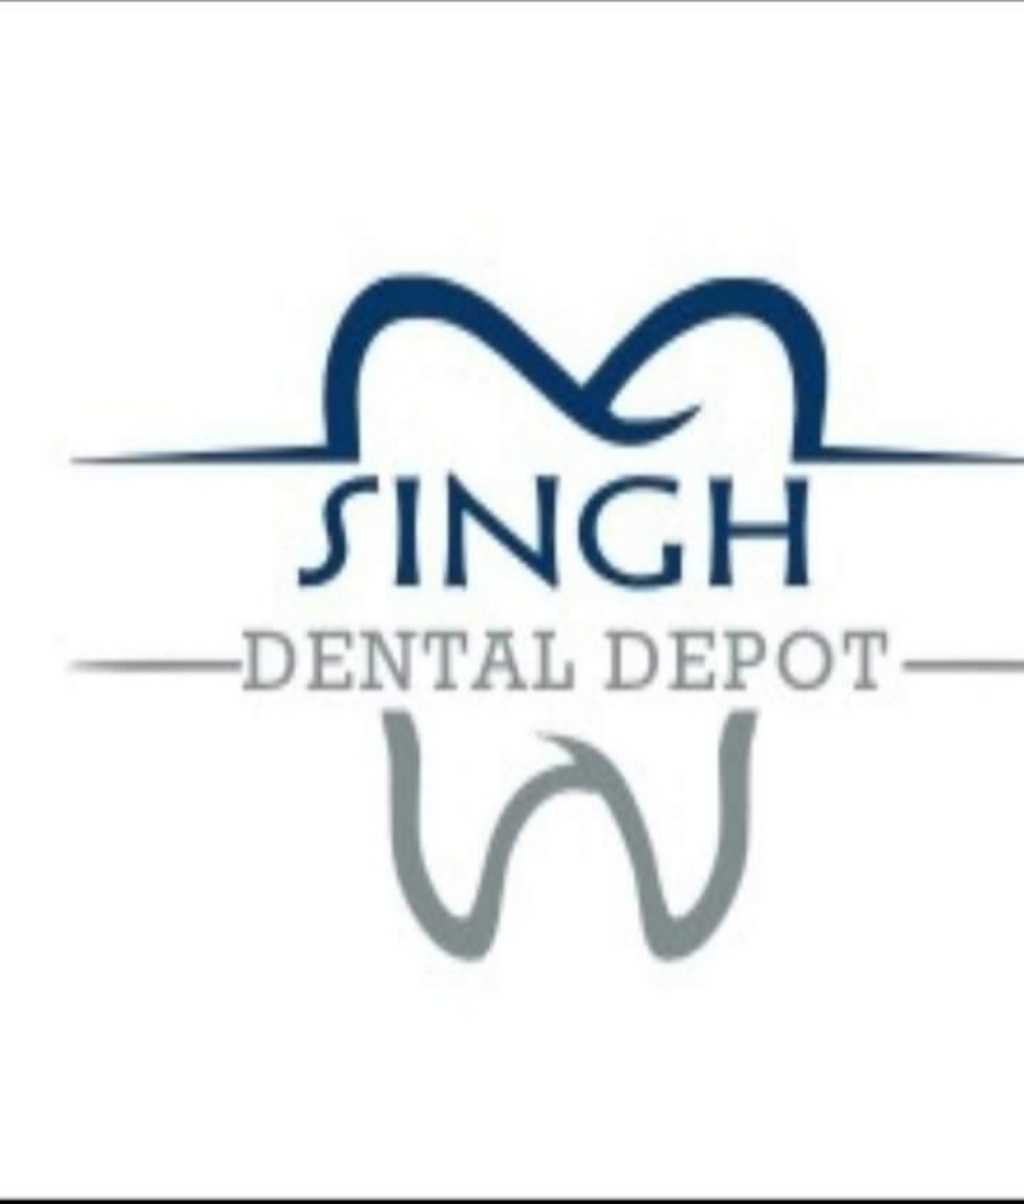 Singh Dental Depot